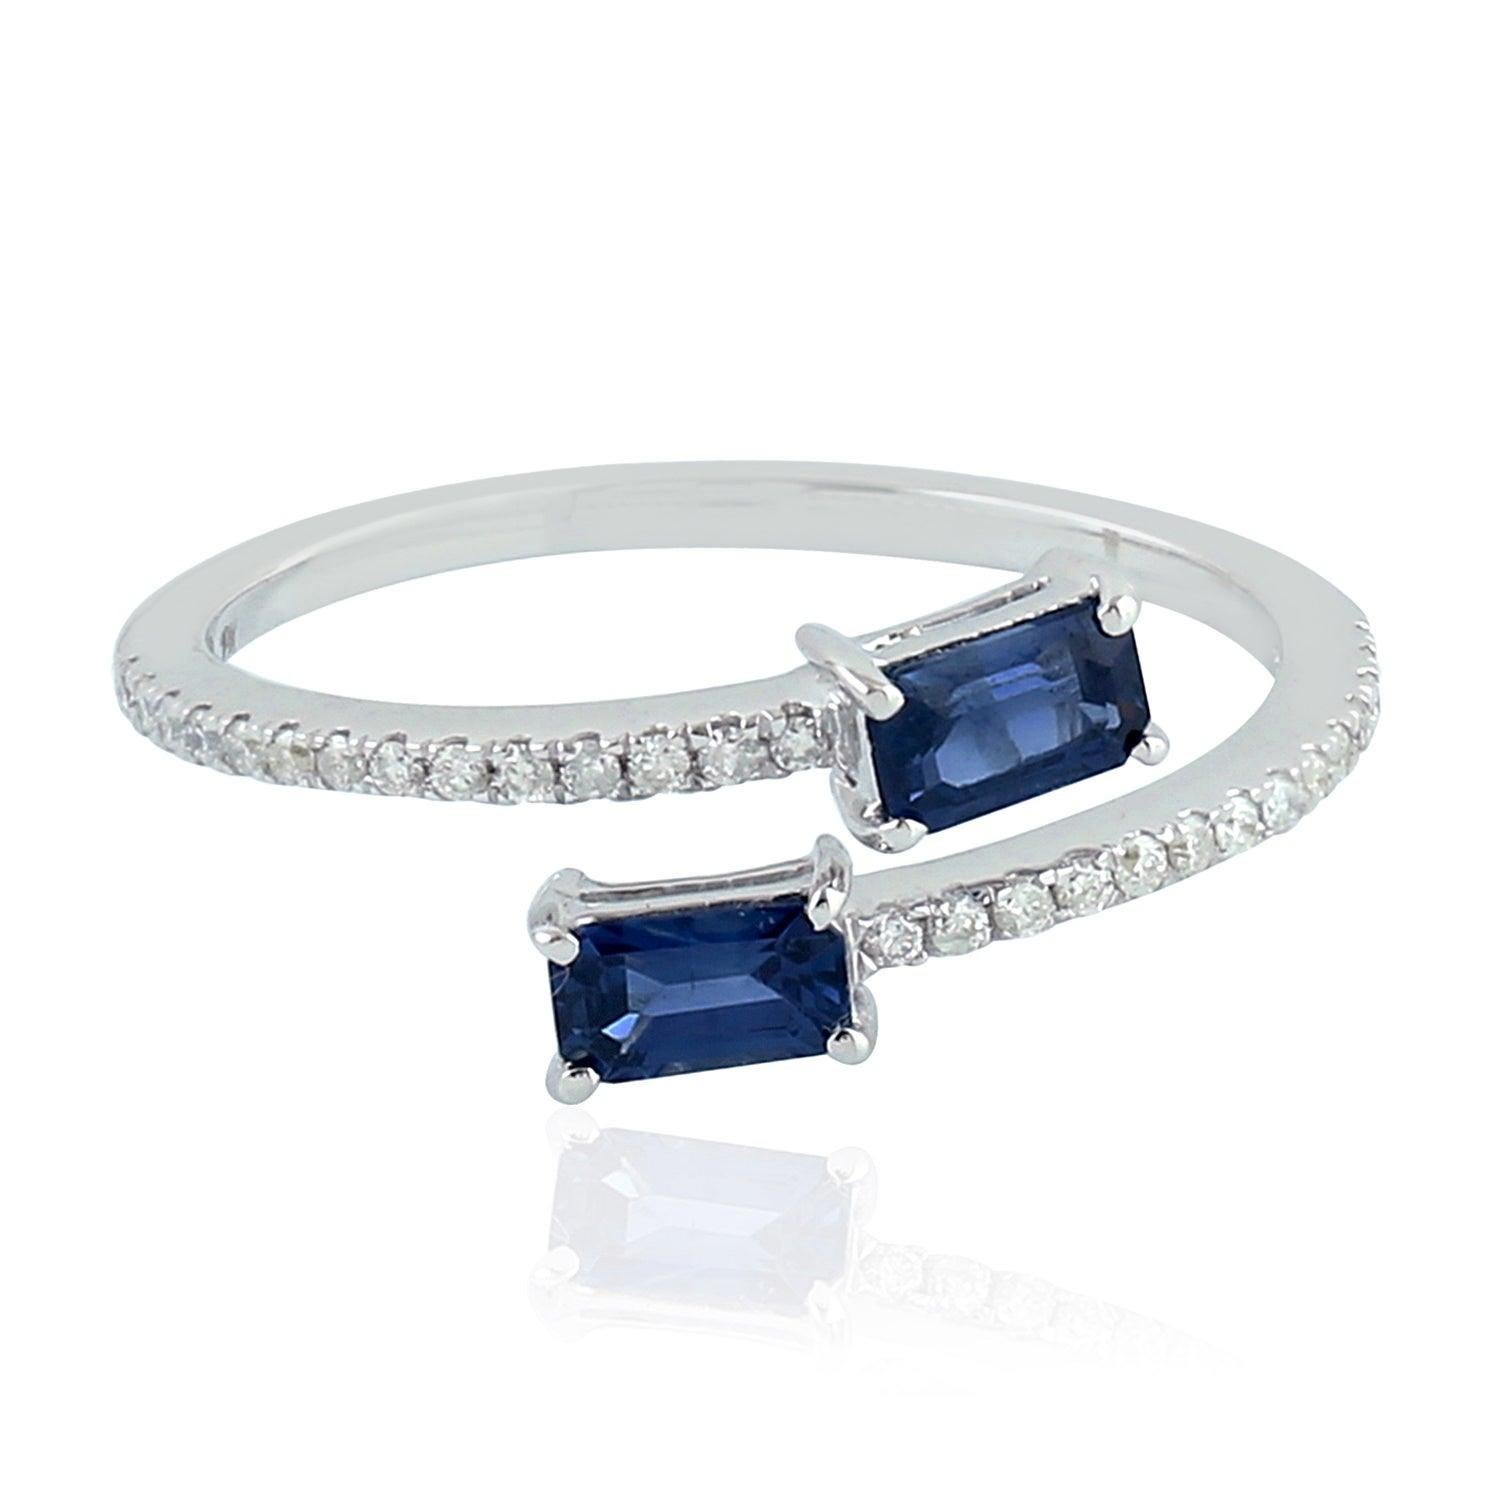 For Sale:  Blue Sapphire Diamond 18 Karat Gold Ring 4